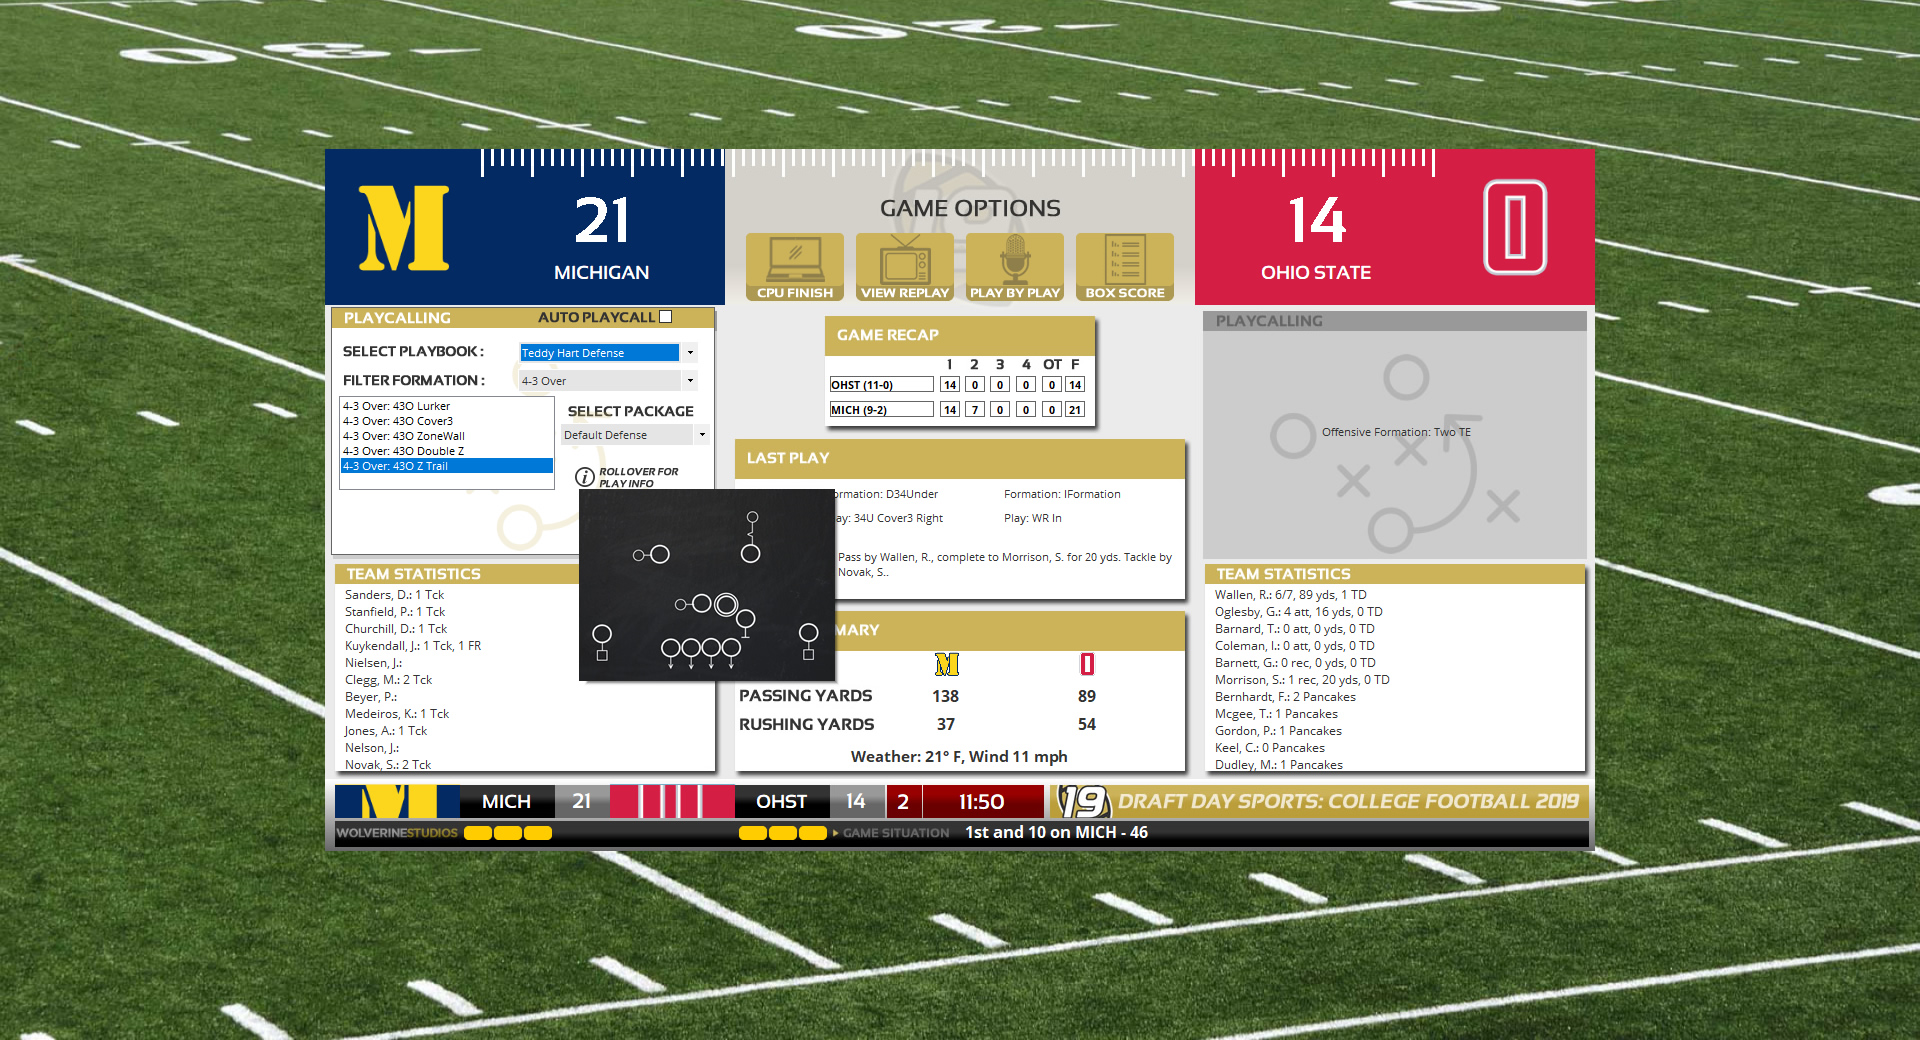 Draft Day Sports: College Football 2019 screenshot